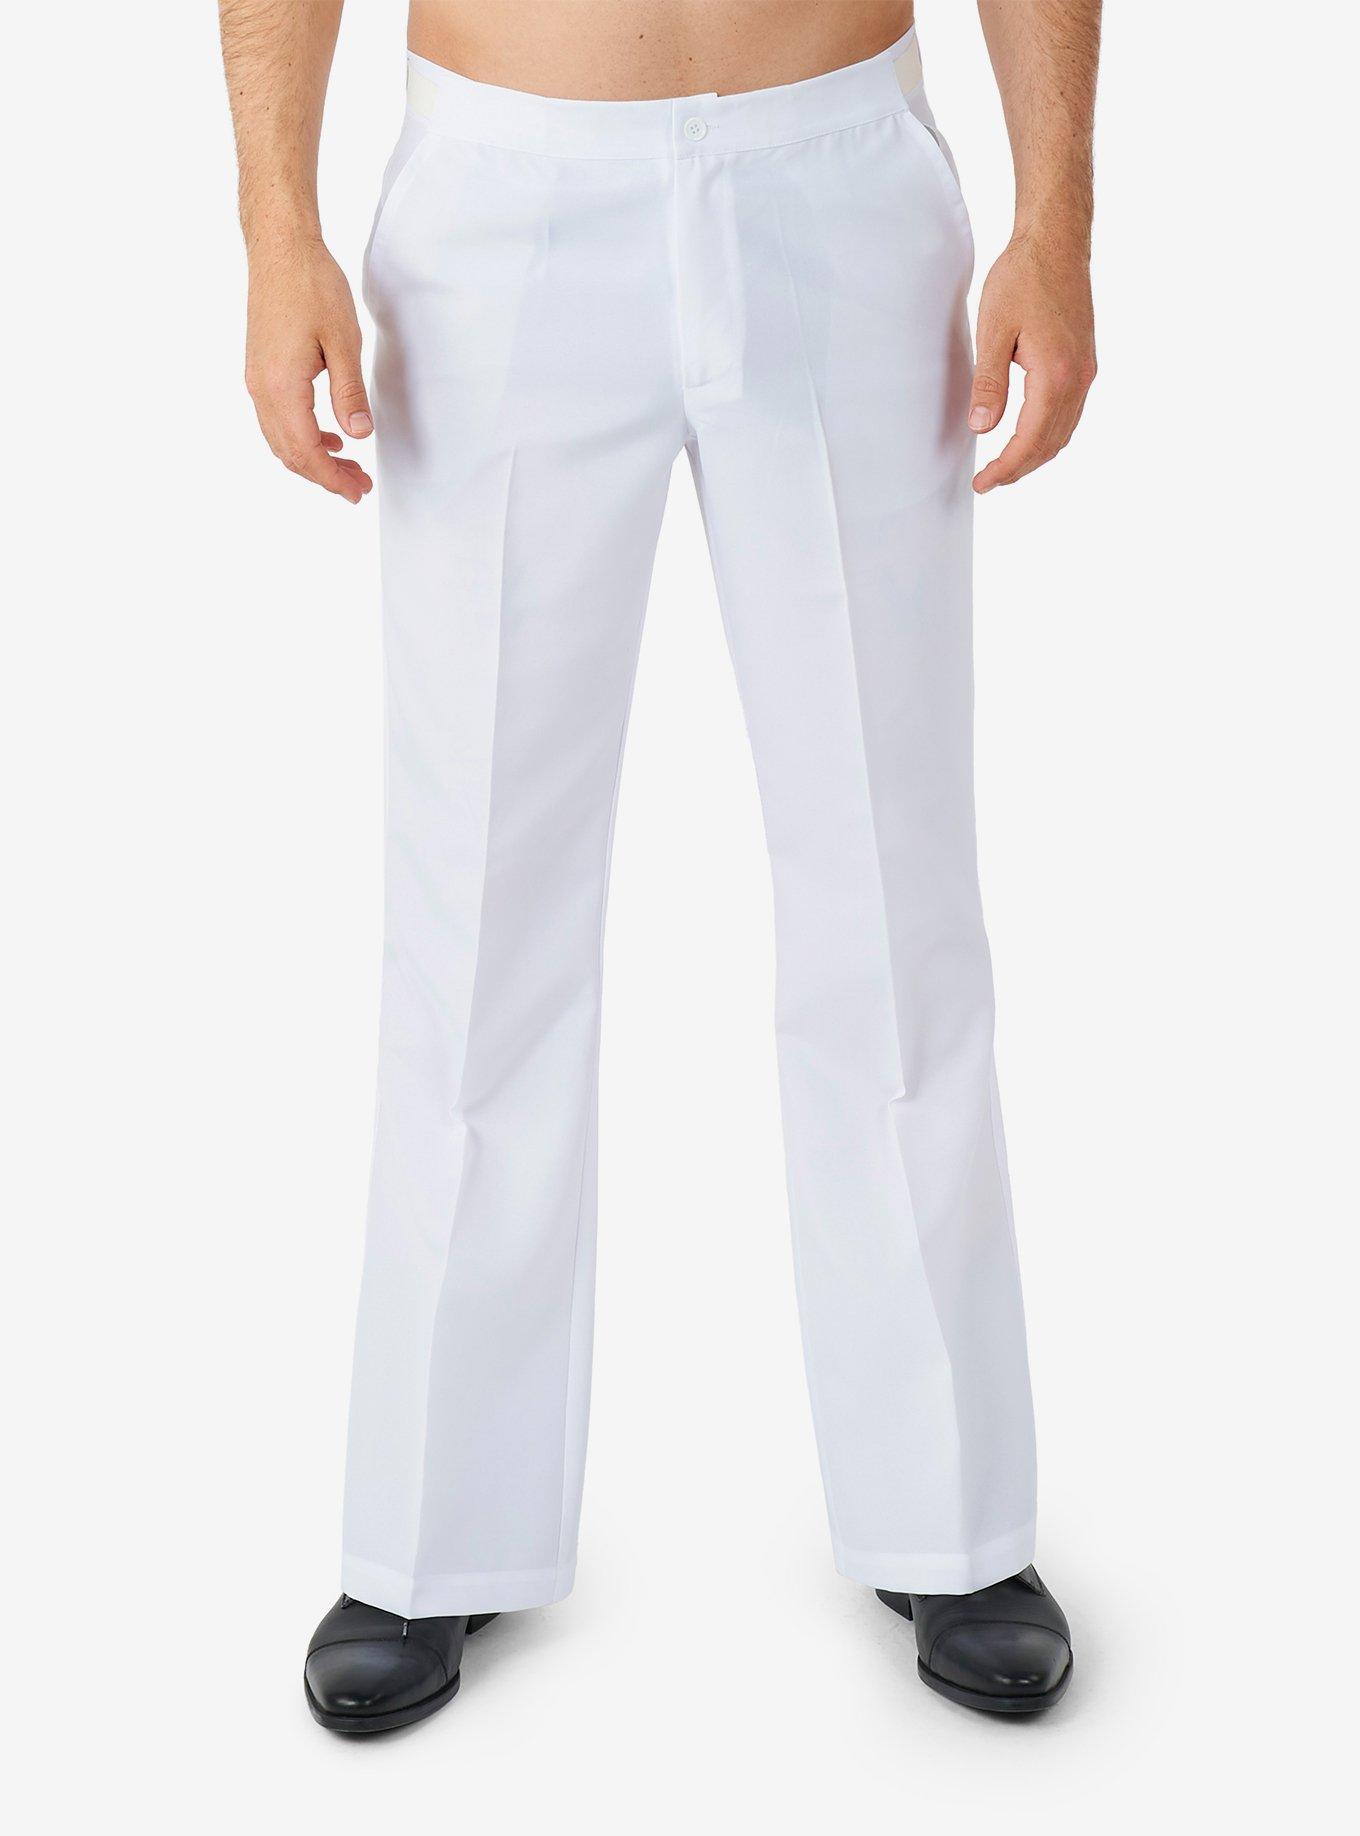 Disco White Suit, BRIGHT WHITE, alternate